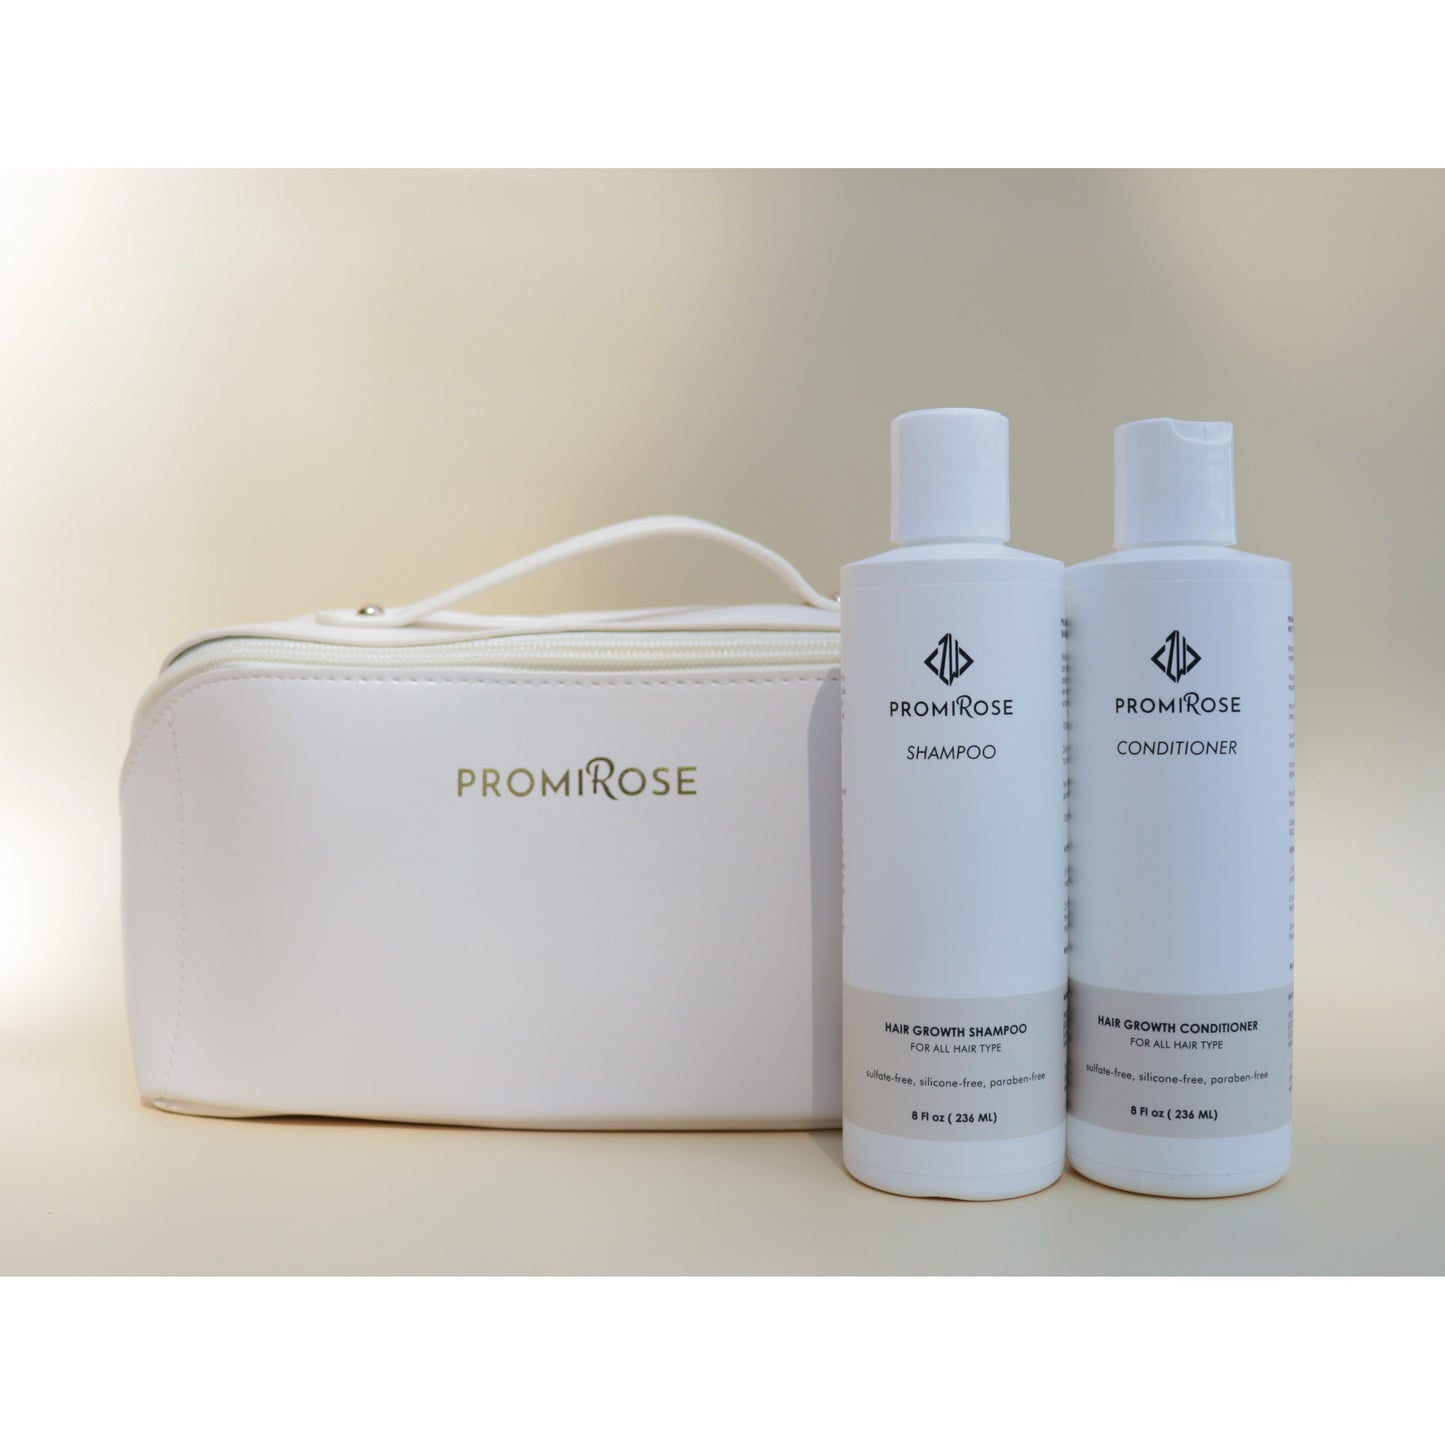 Promirose Shampoo & Conditioner + travel bag